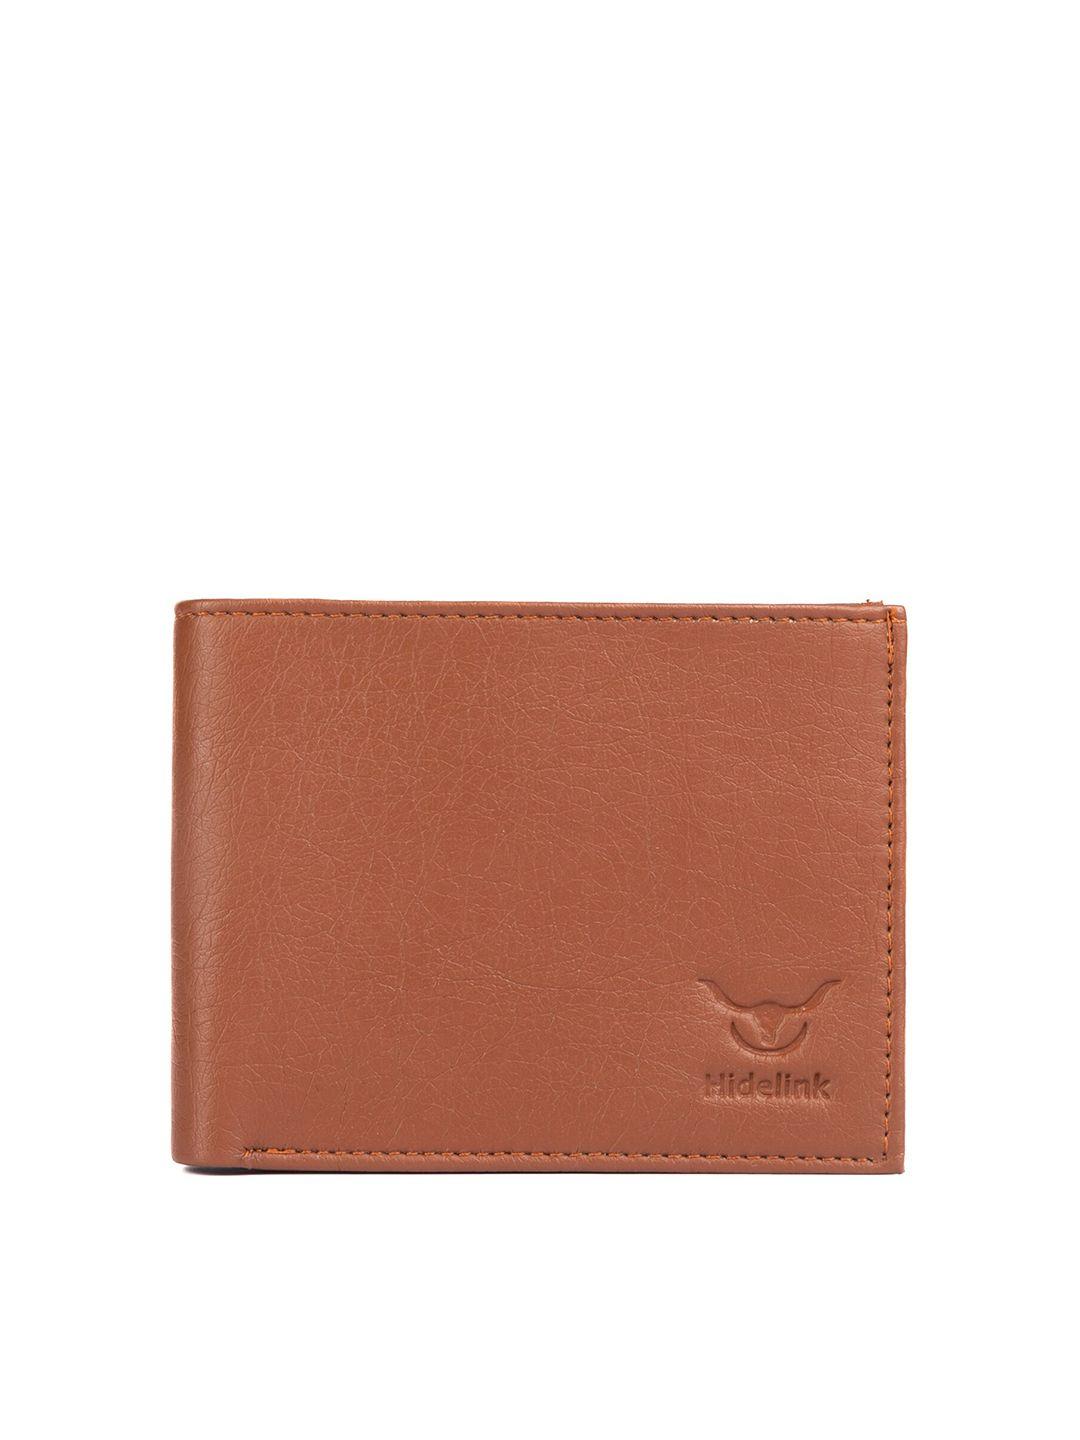 hidelink men brown textured two fold wallet